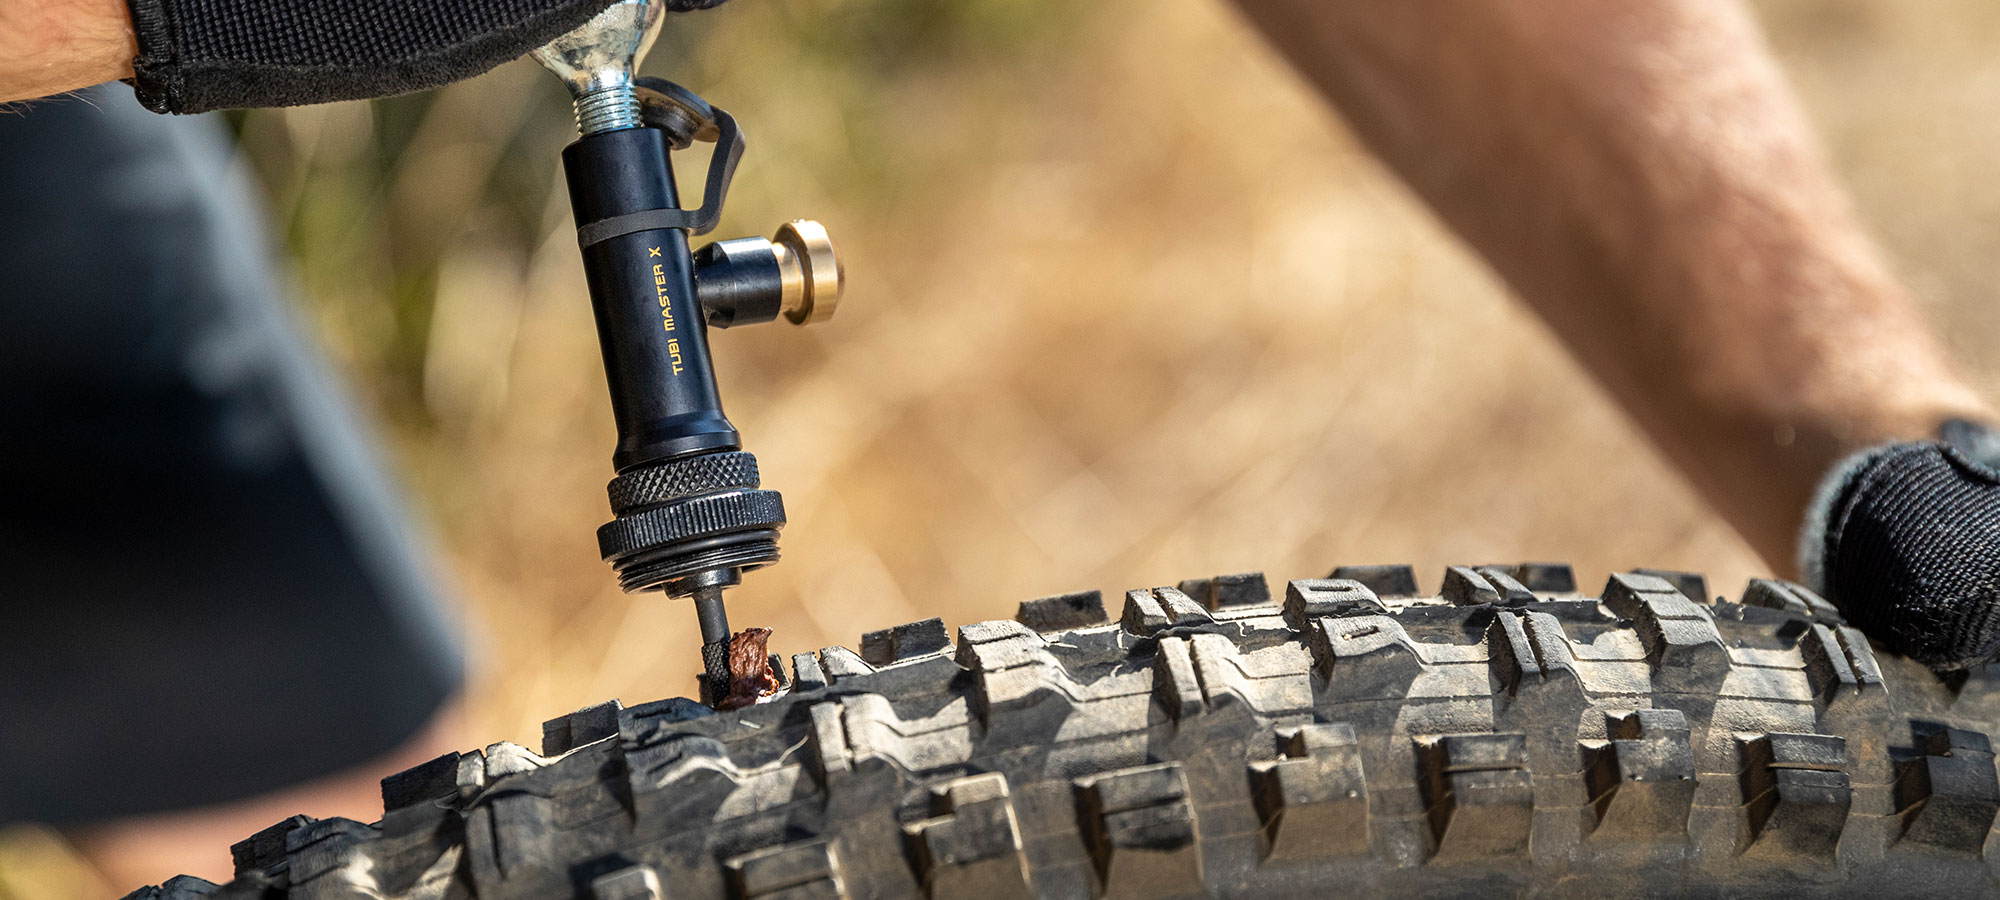 Tubeless Bike Tire Repair Kit for Road and Mountain Bikes